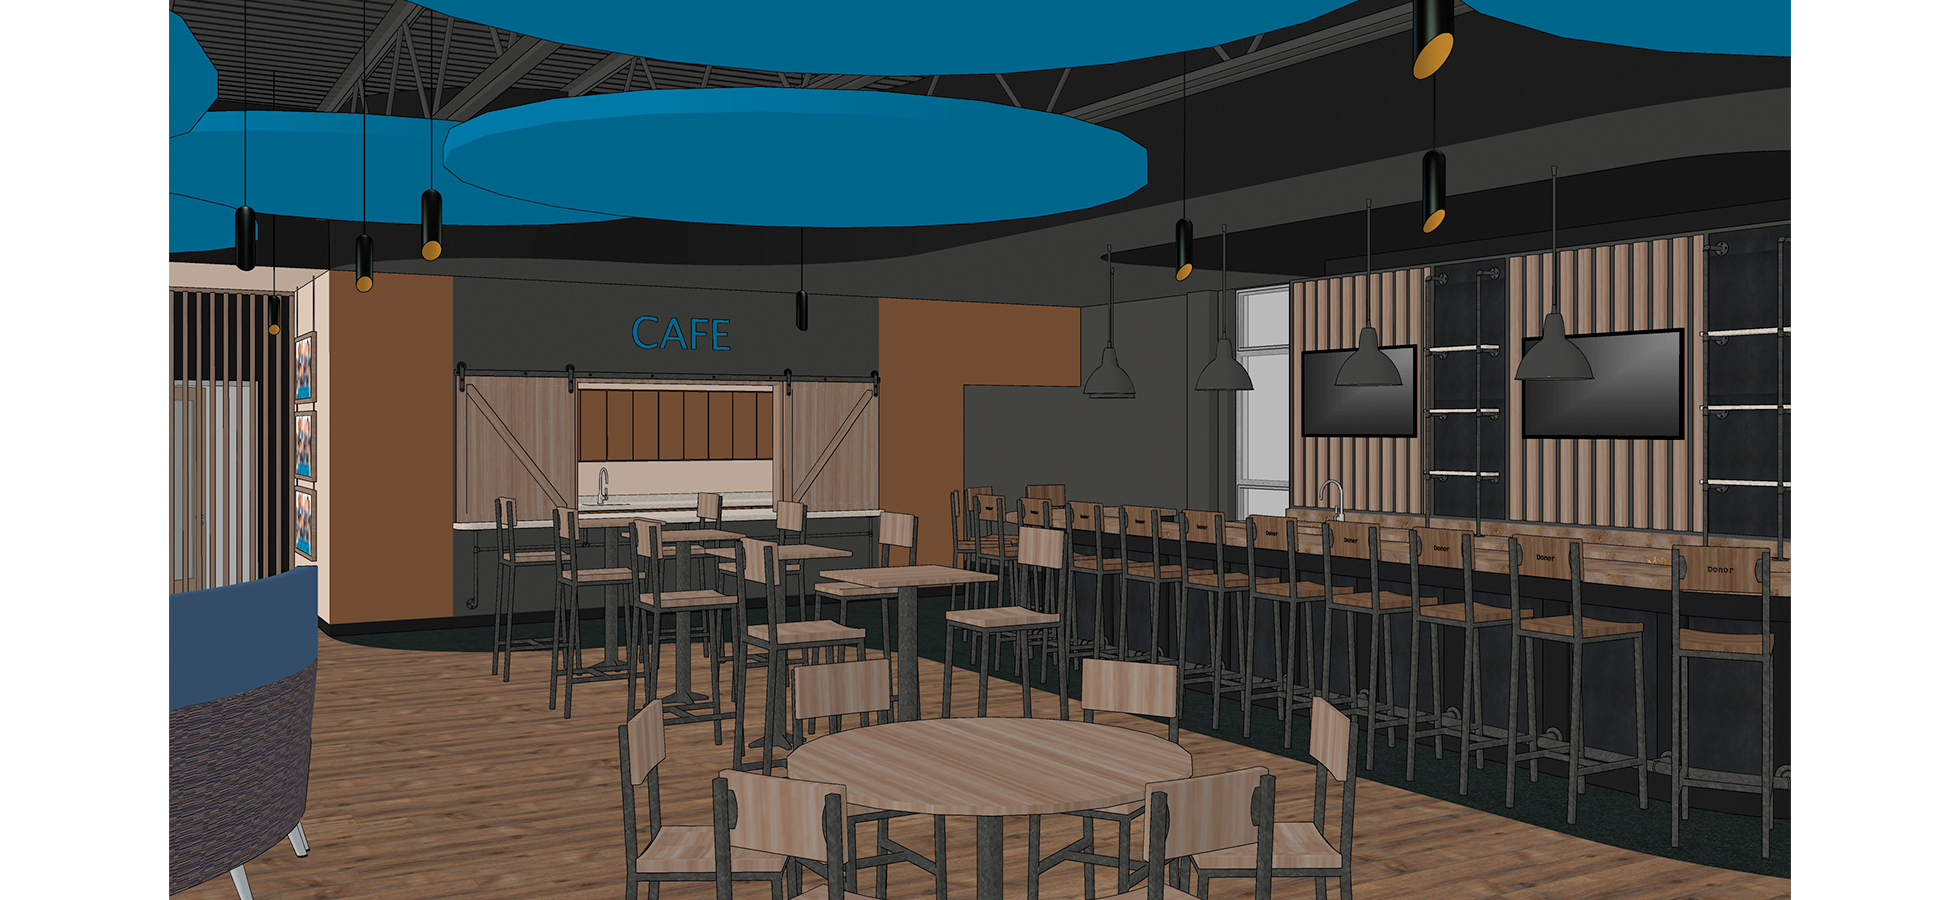 Construction of Campus Pub Begins in Hagan Campus Center